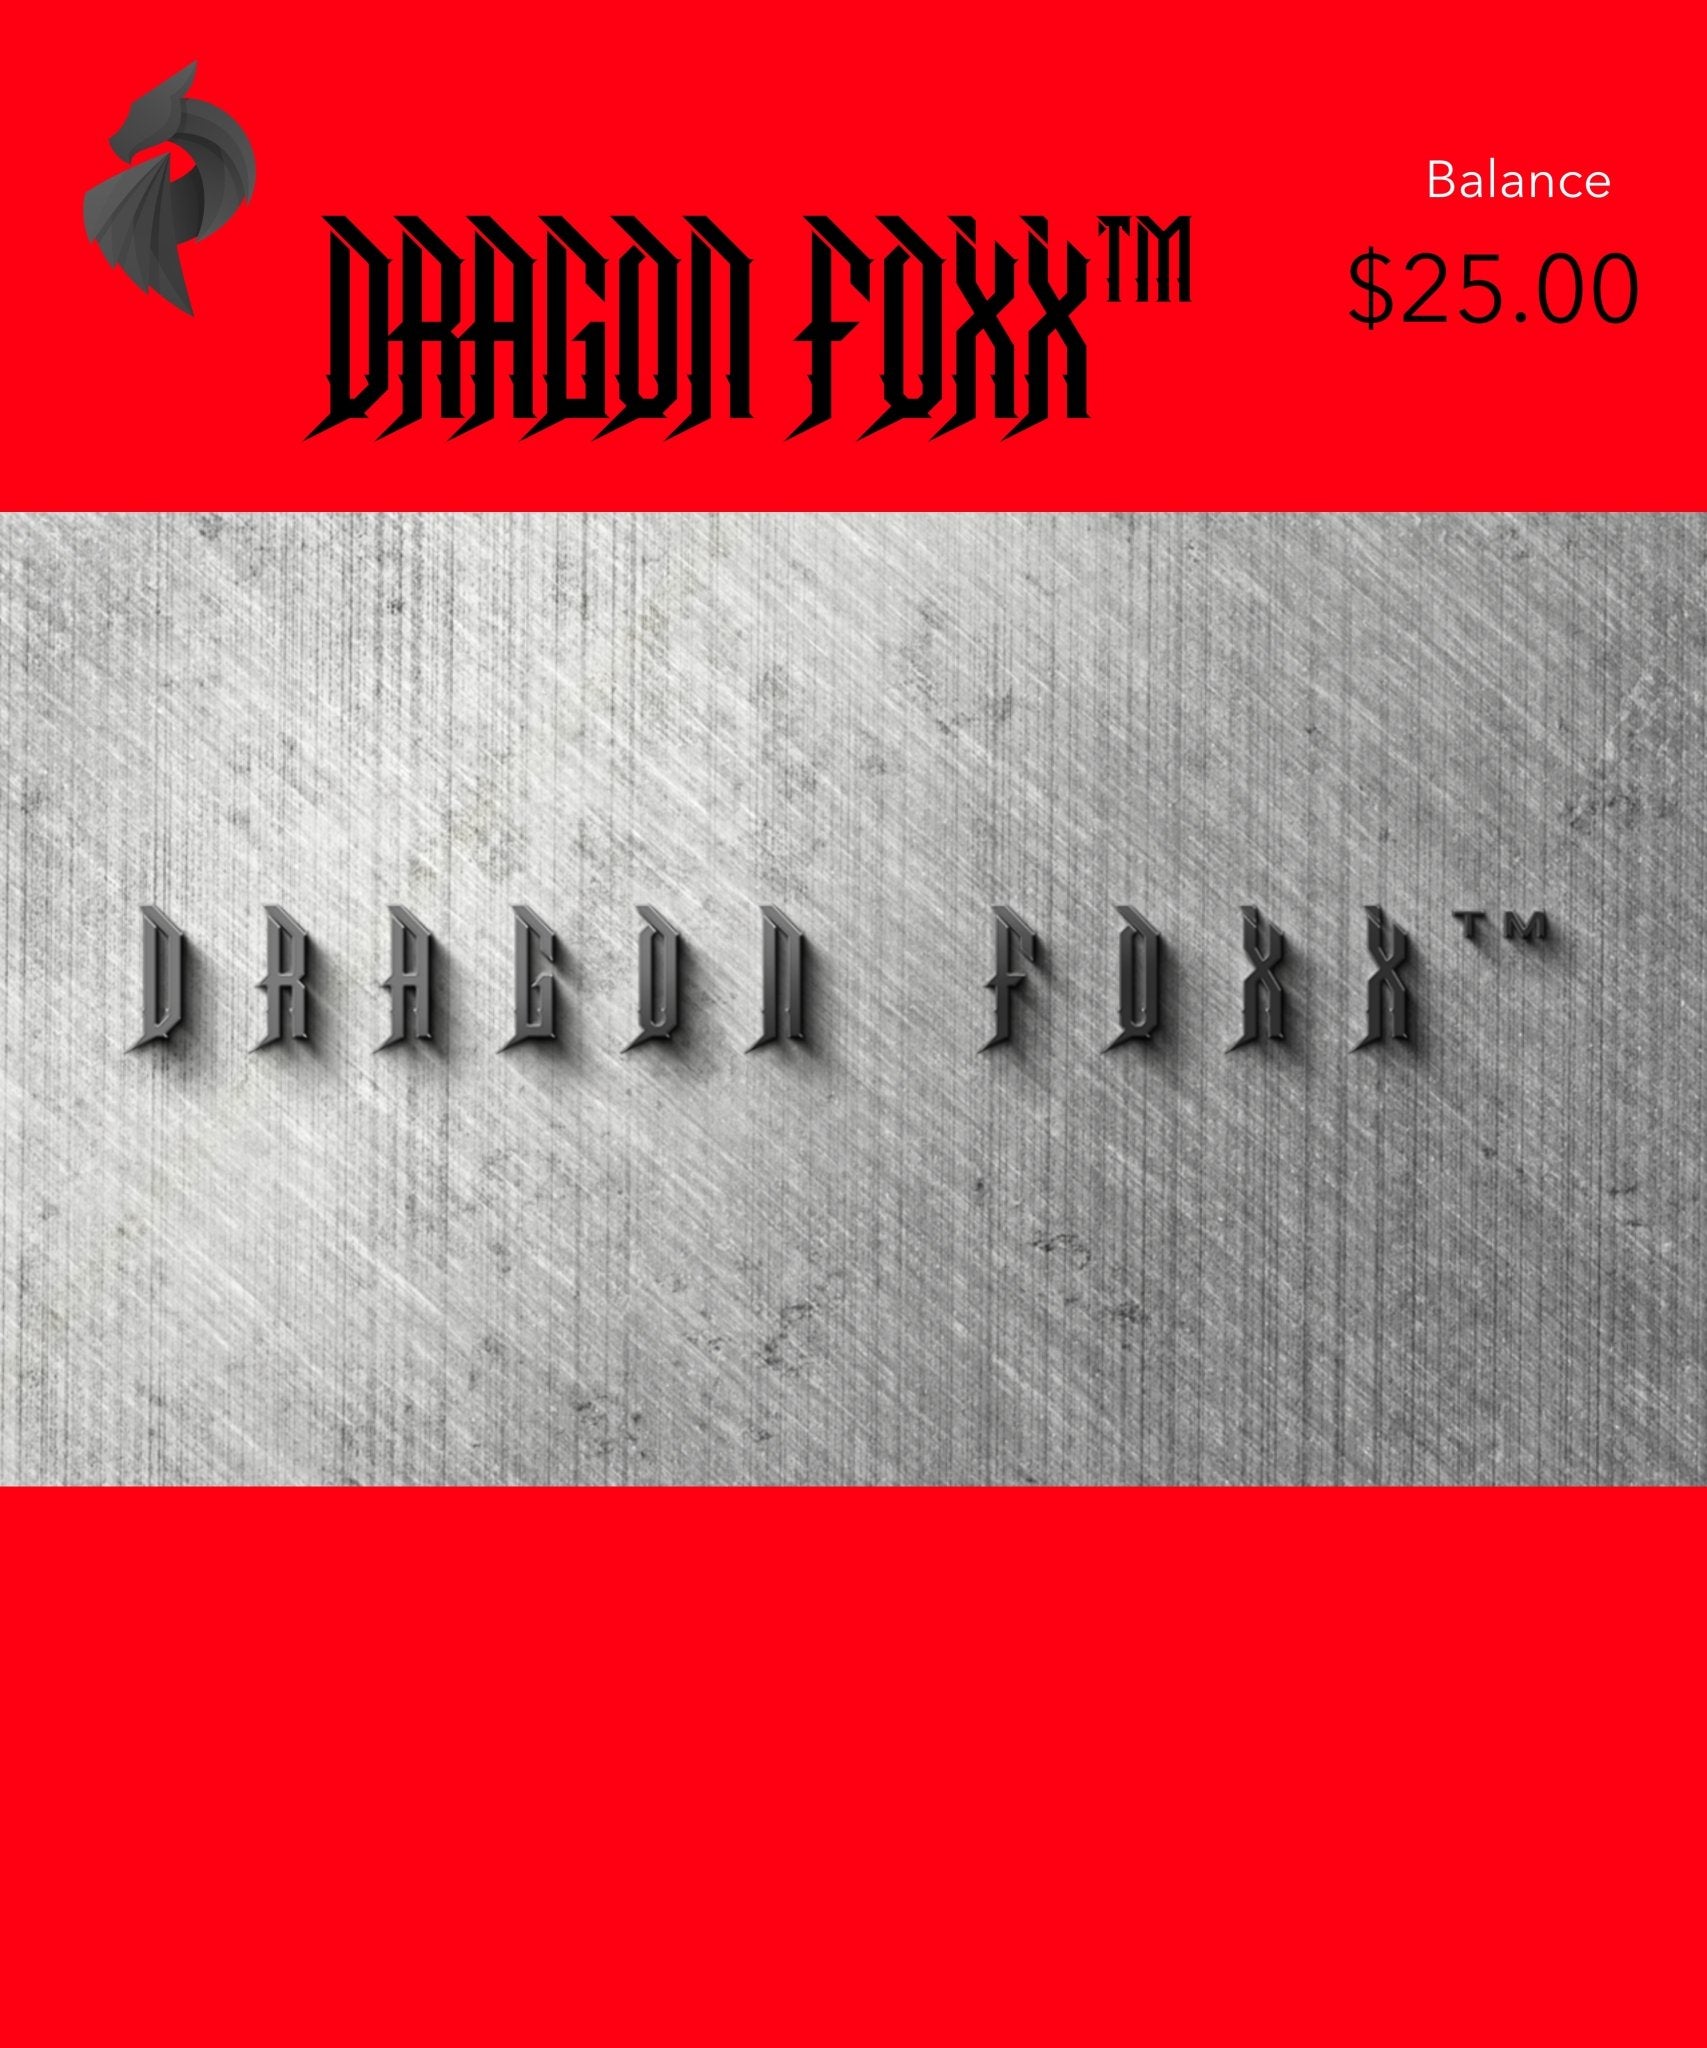 DRAGON FOXX™ Gift Card - Perfect Gift Idea! - Gift Card - DRAGON FOXX™ - $25.00 - - Dragon Foxx™ Gift Card - -